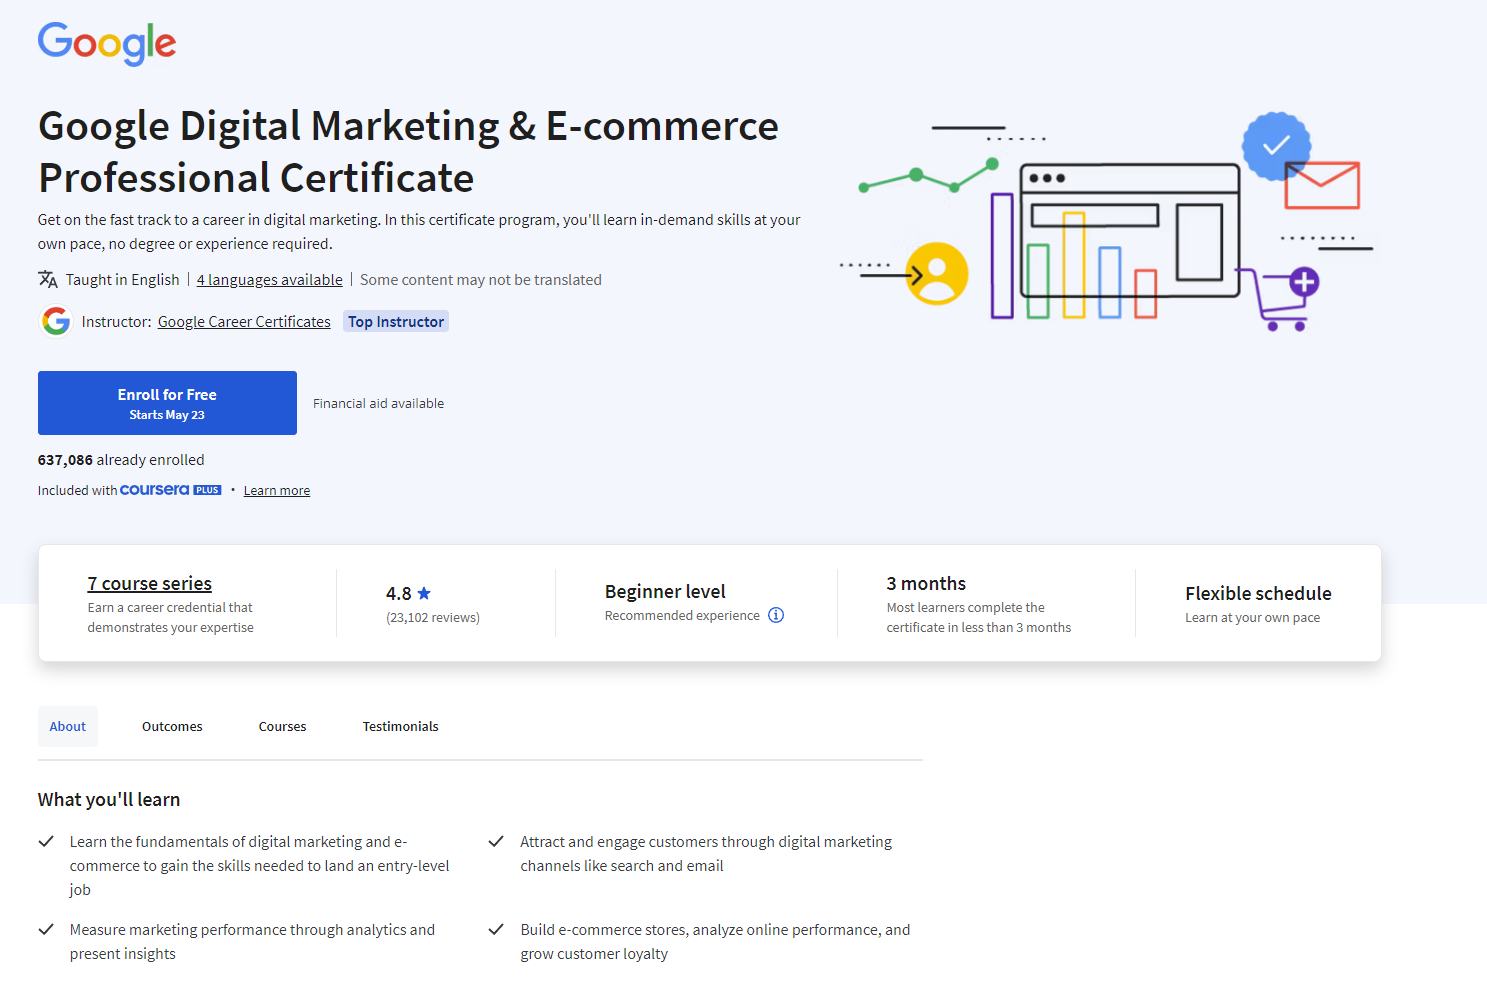 Google digital marketing course on Coursera